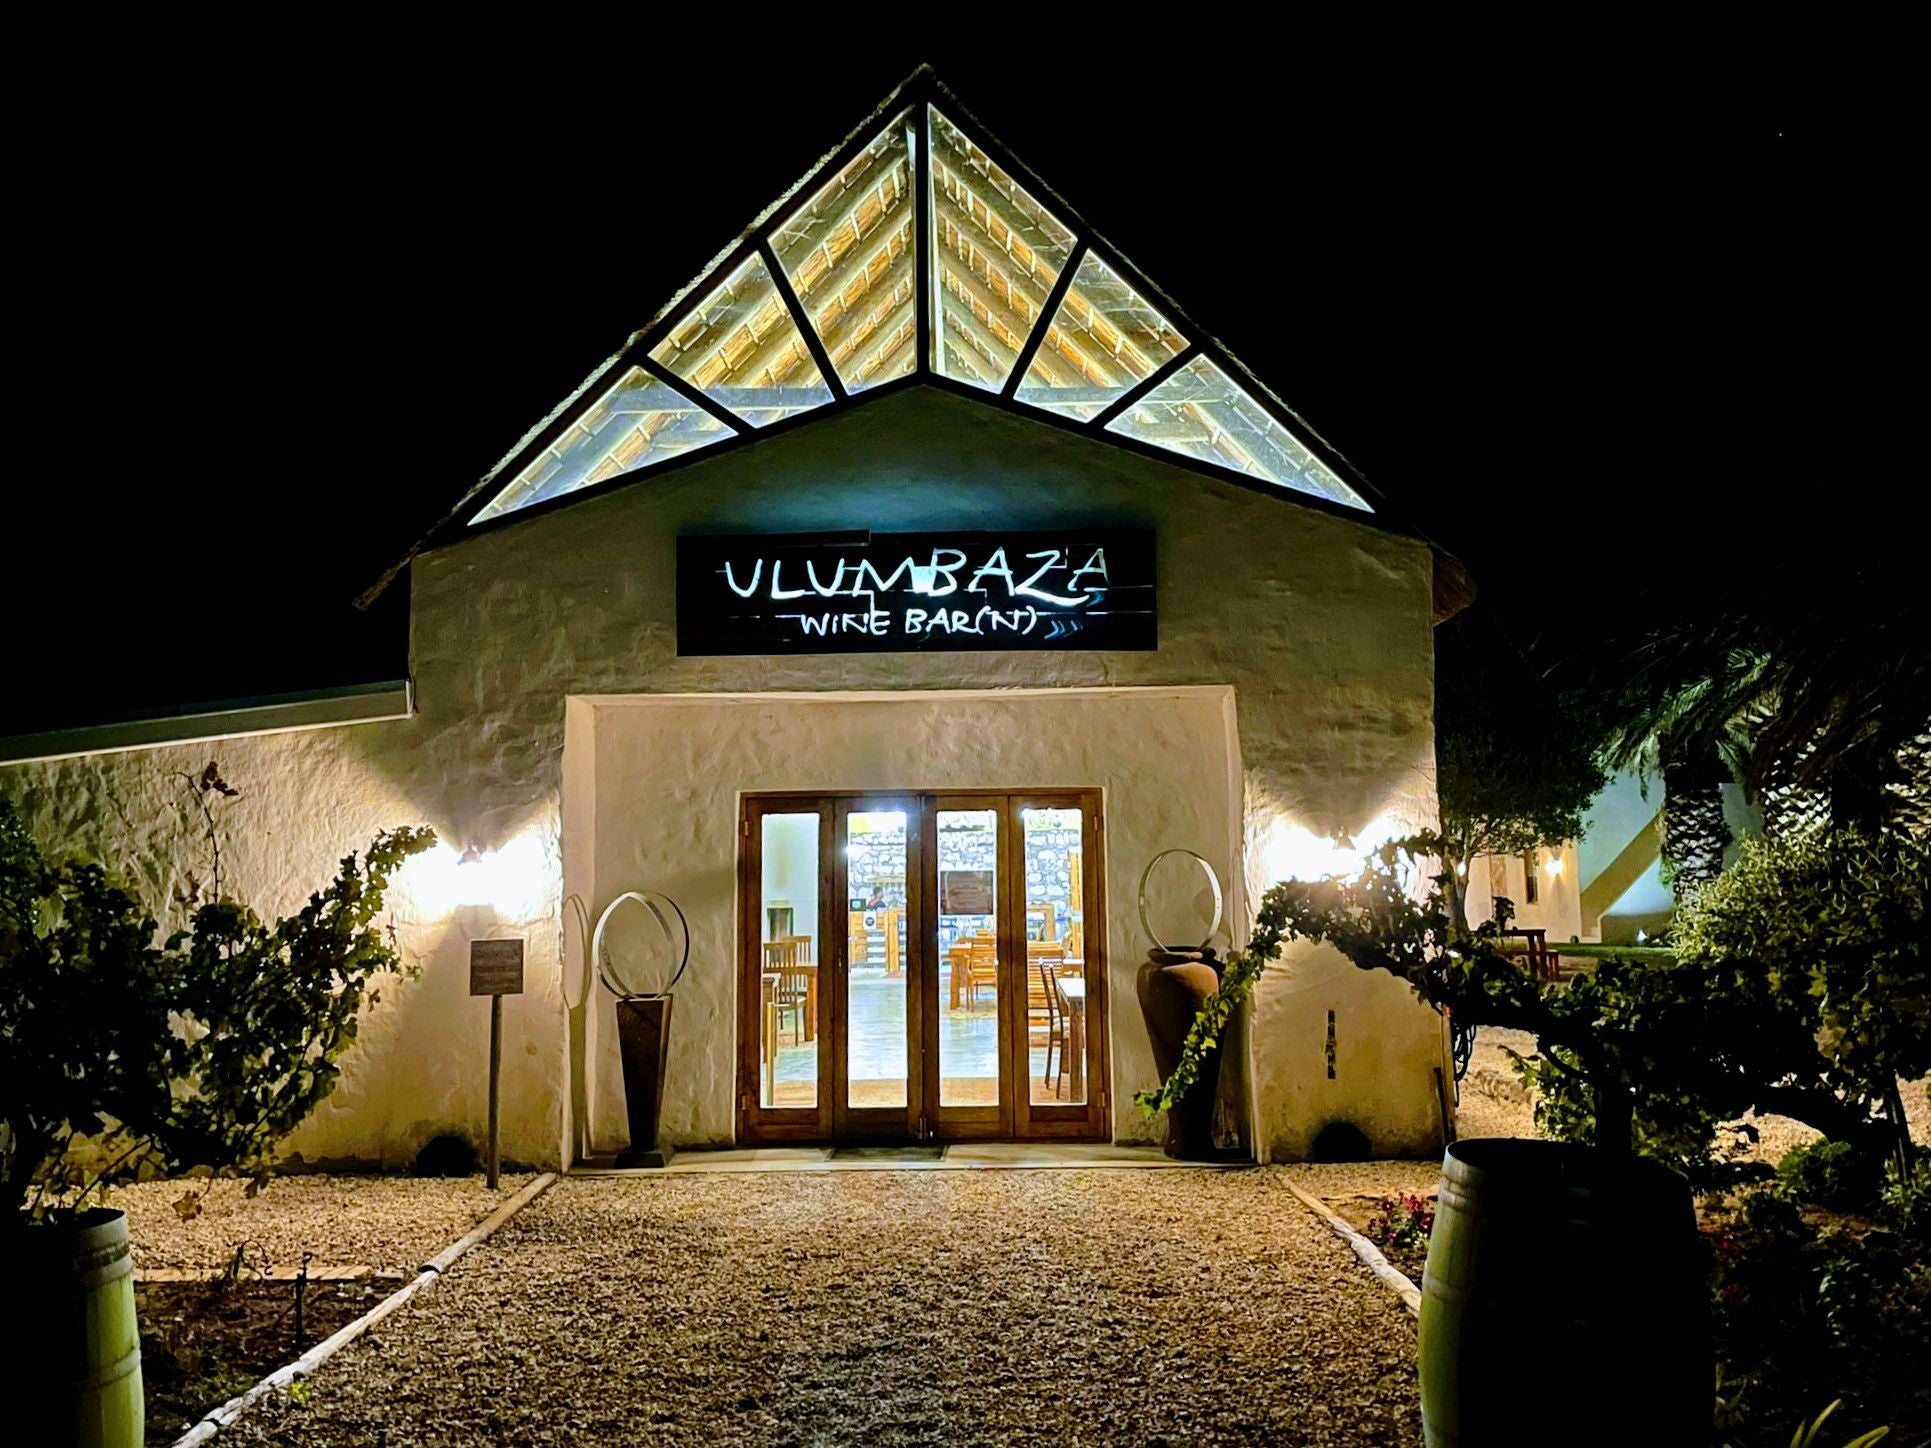  Ulumbaza Wine Bar(n) @ Springfontein Wine Estate